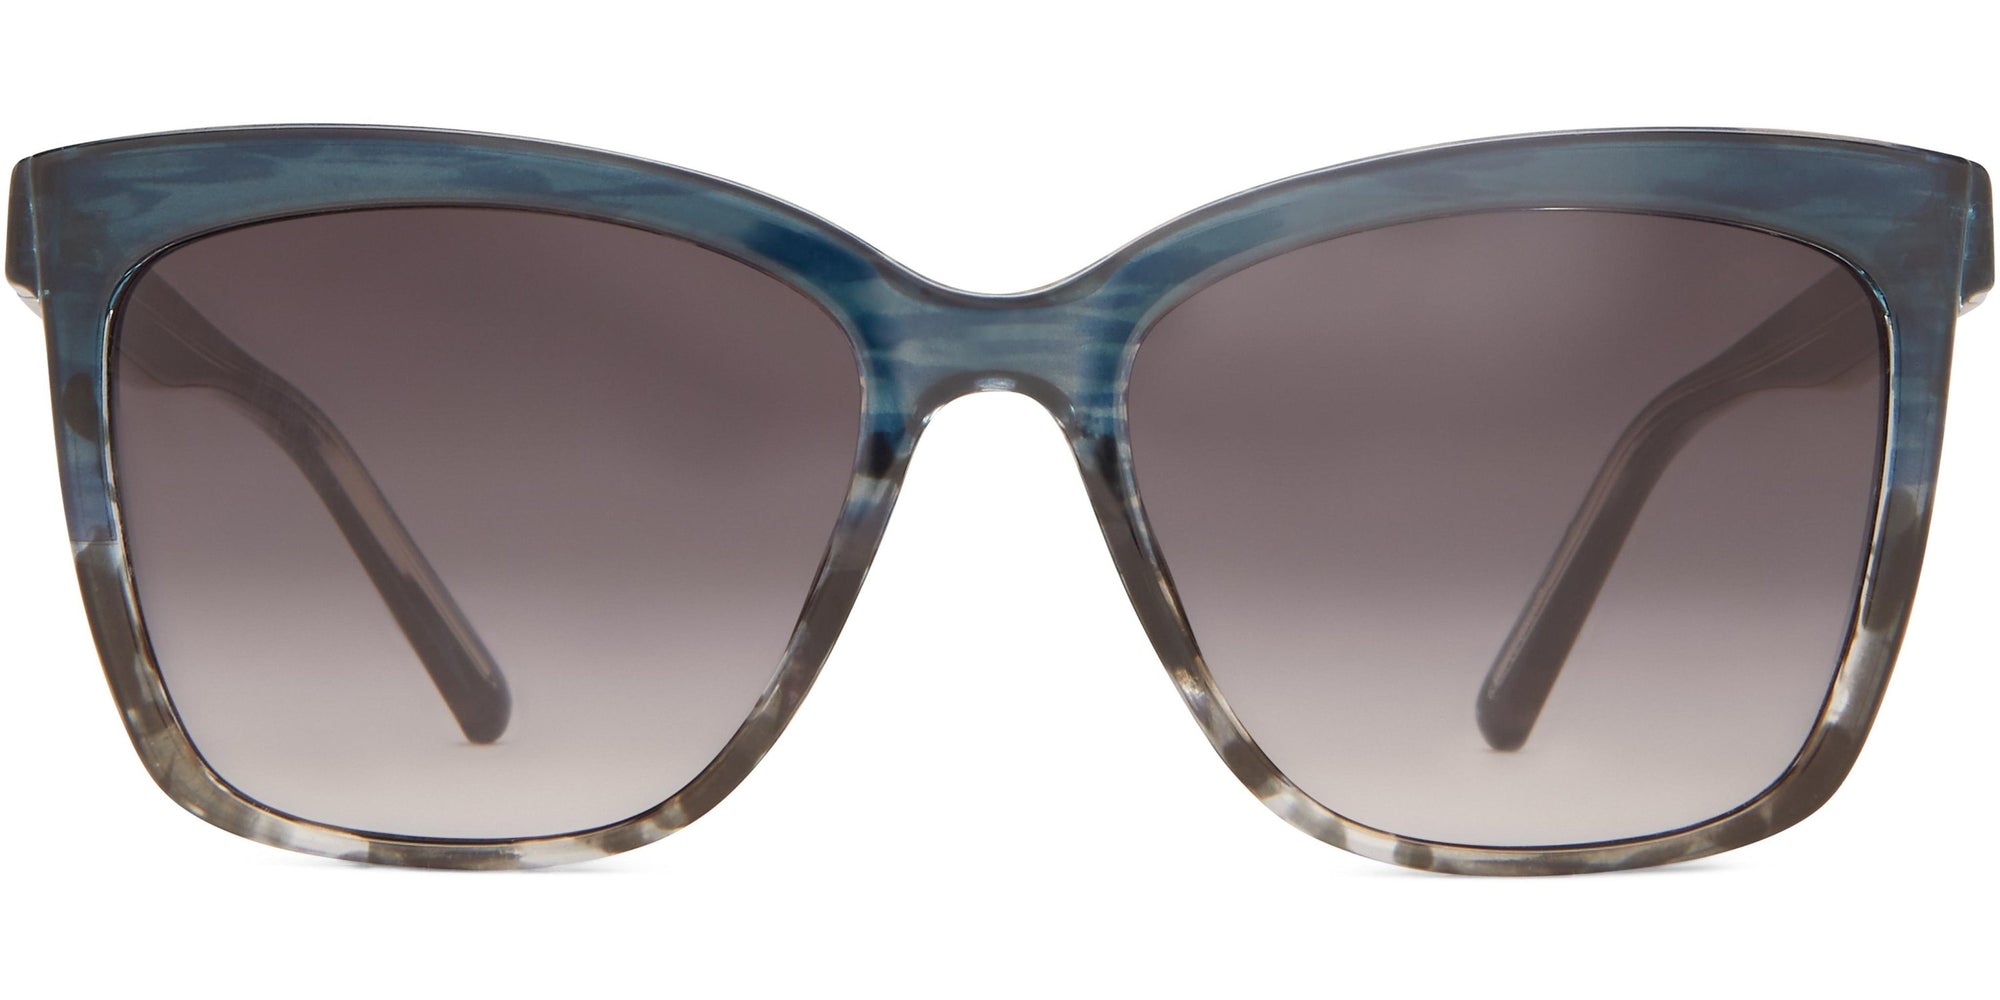 Isabelle - Blue/Gray Lens - Sunglasses